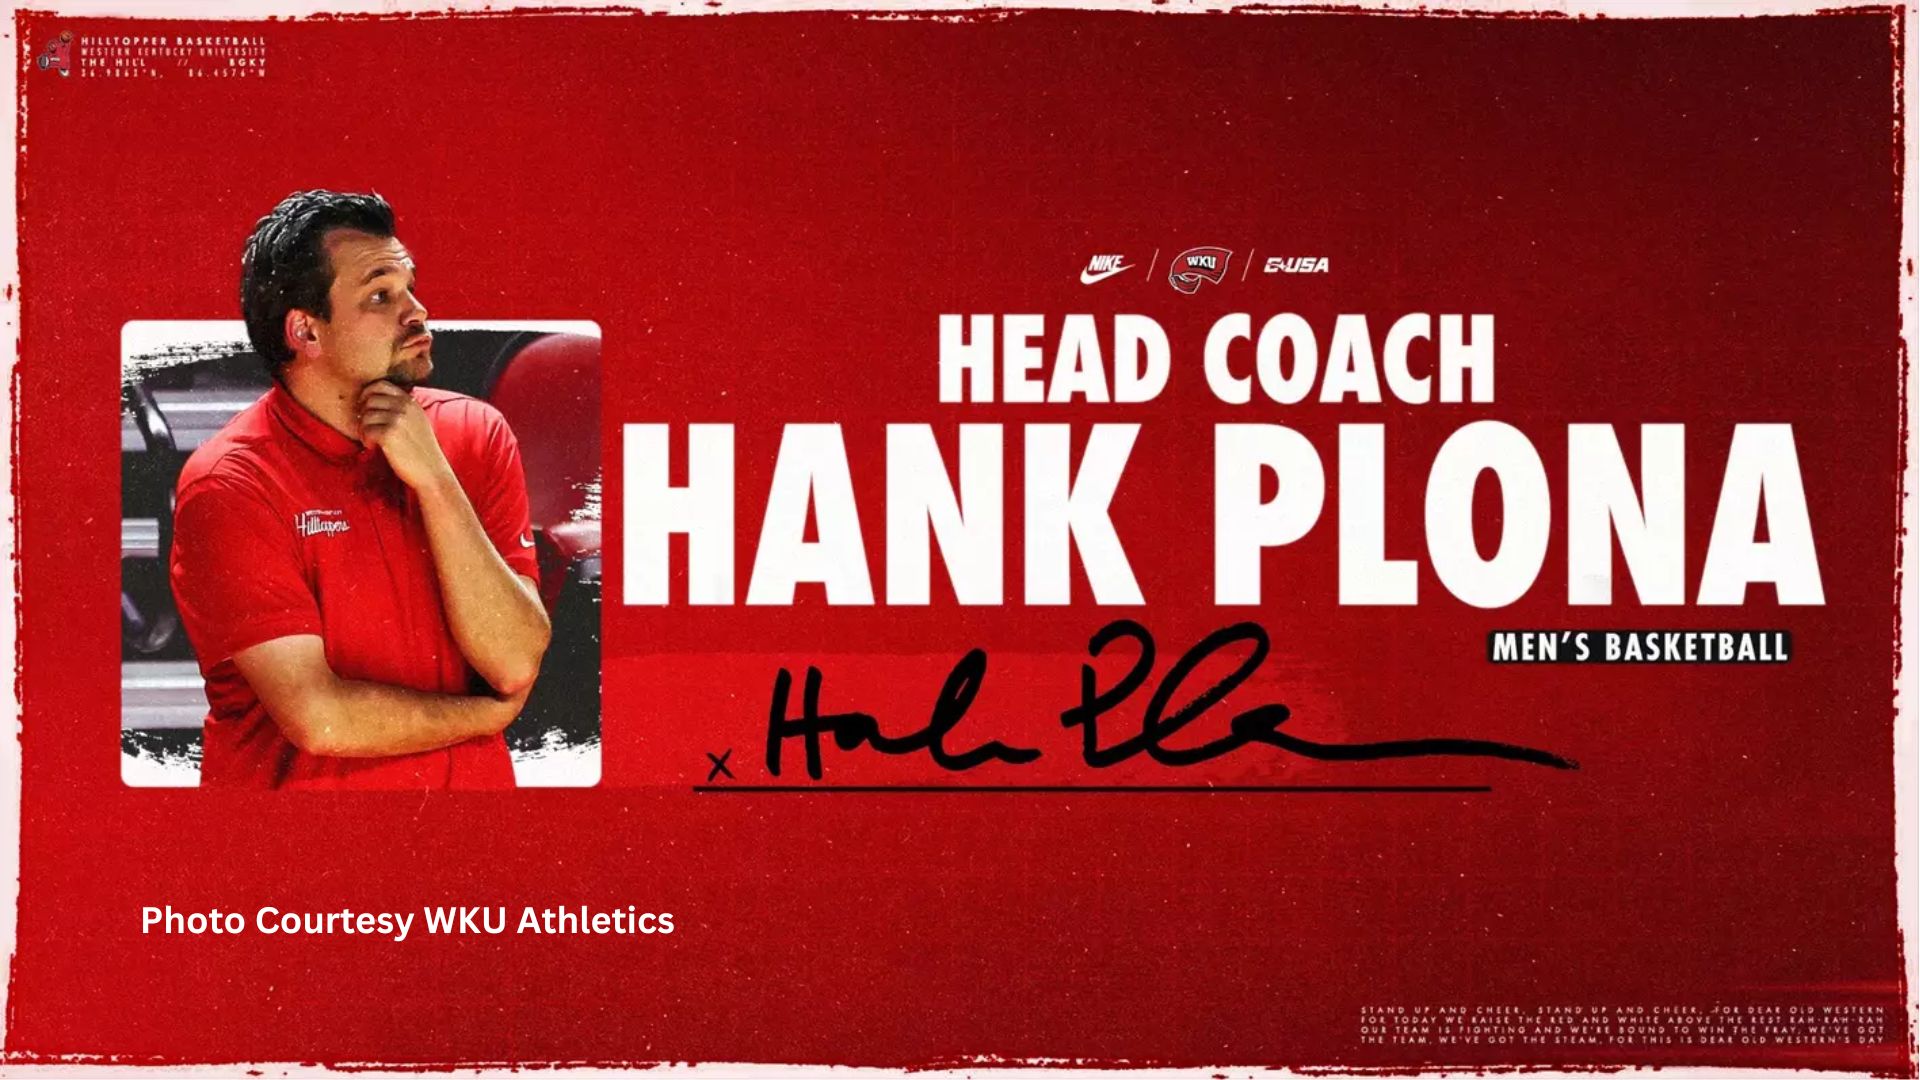 Hank Plona Named Head Basketball Coach at Western Kentucky: An Impressive Winning Record and Championship Streaks